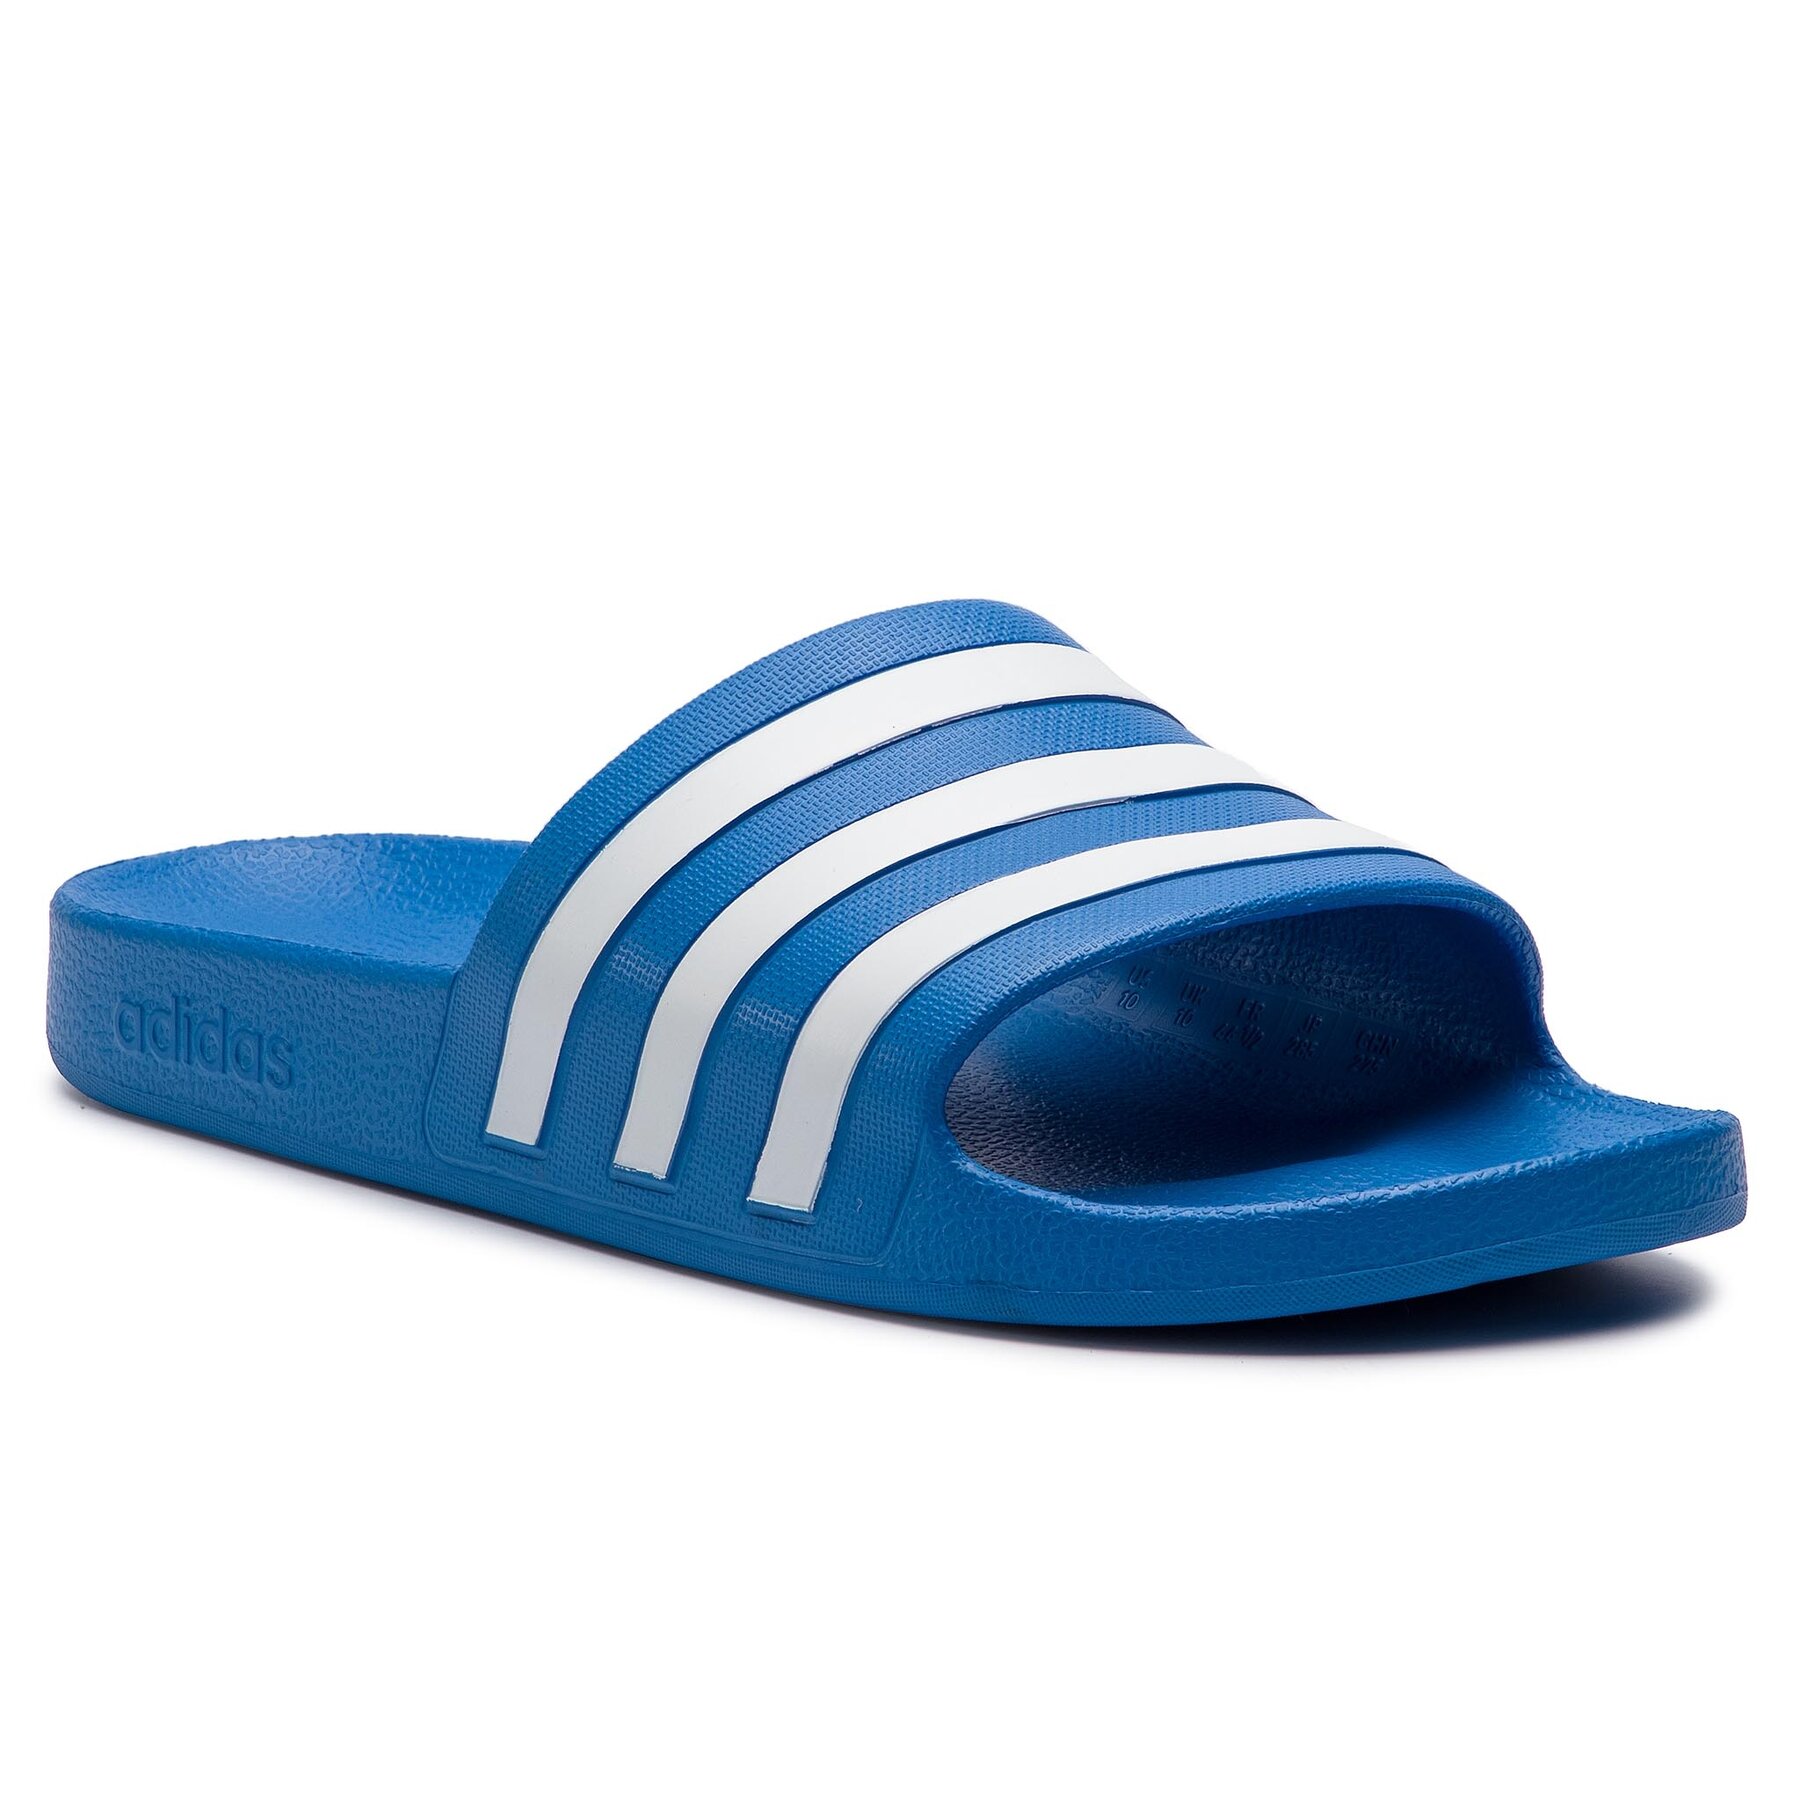 Comprar en oferta Adidas Adilette Aqua Slides true blue/ftwr white/true blue